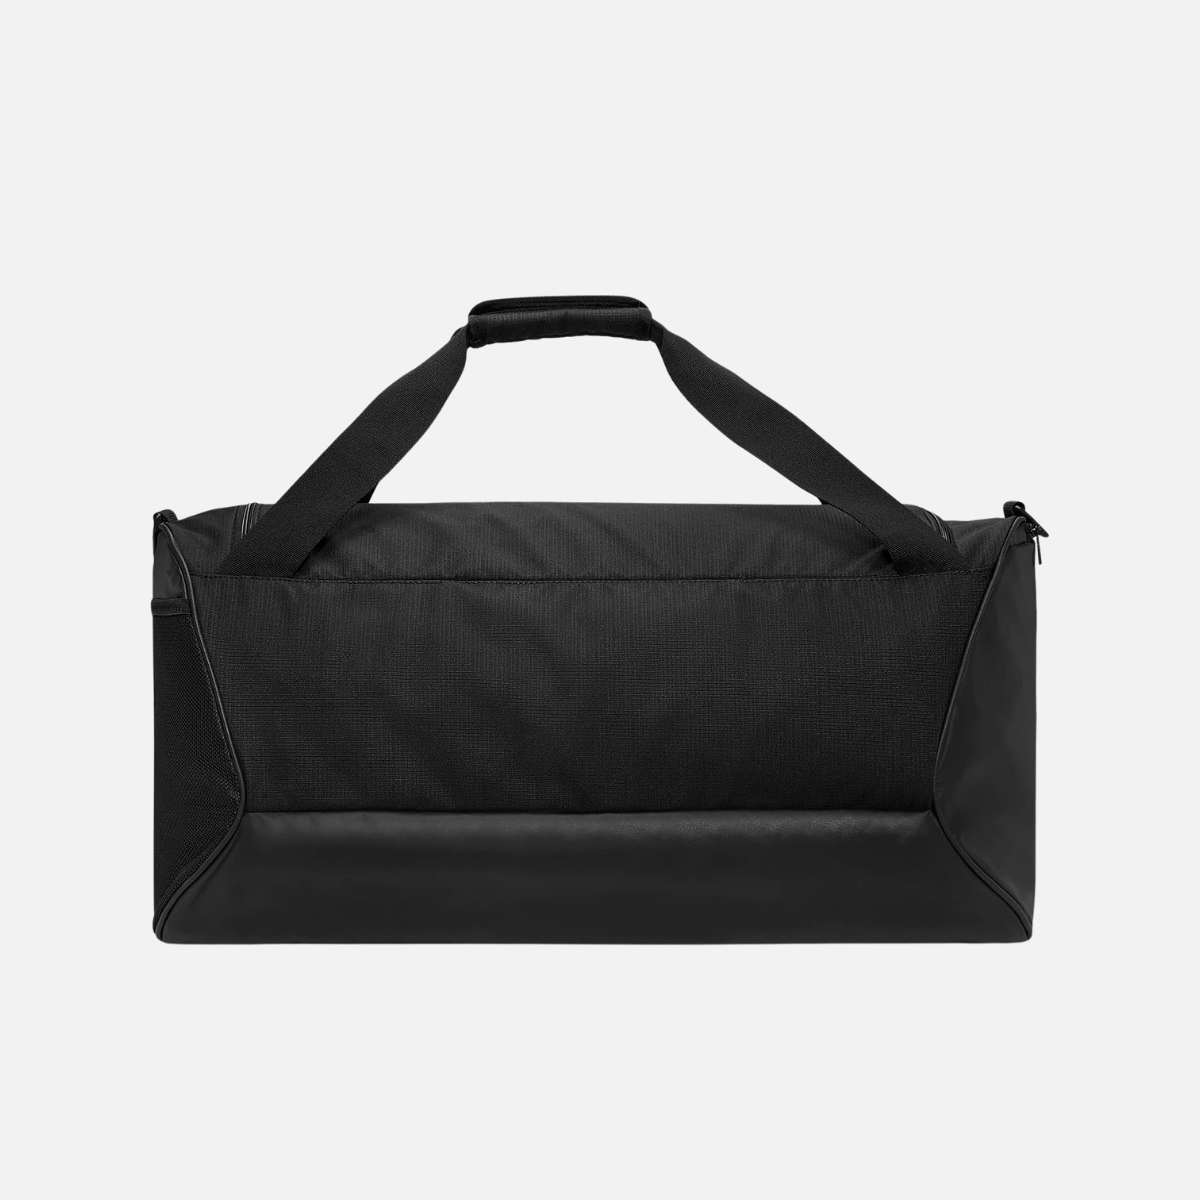 Nike Brasilia 9.5 Training Duffel Bag (60L) -Black/Black/White